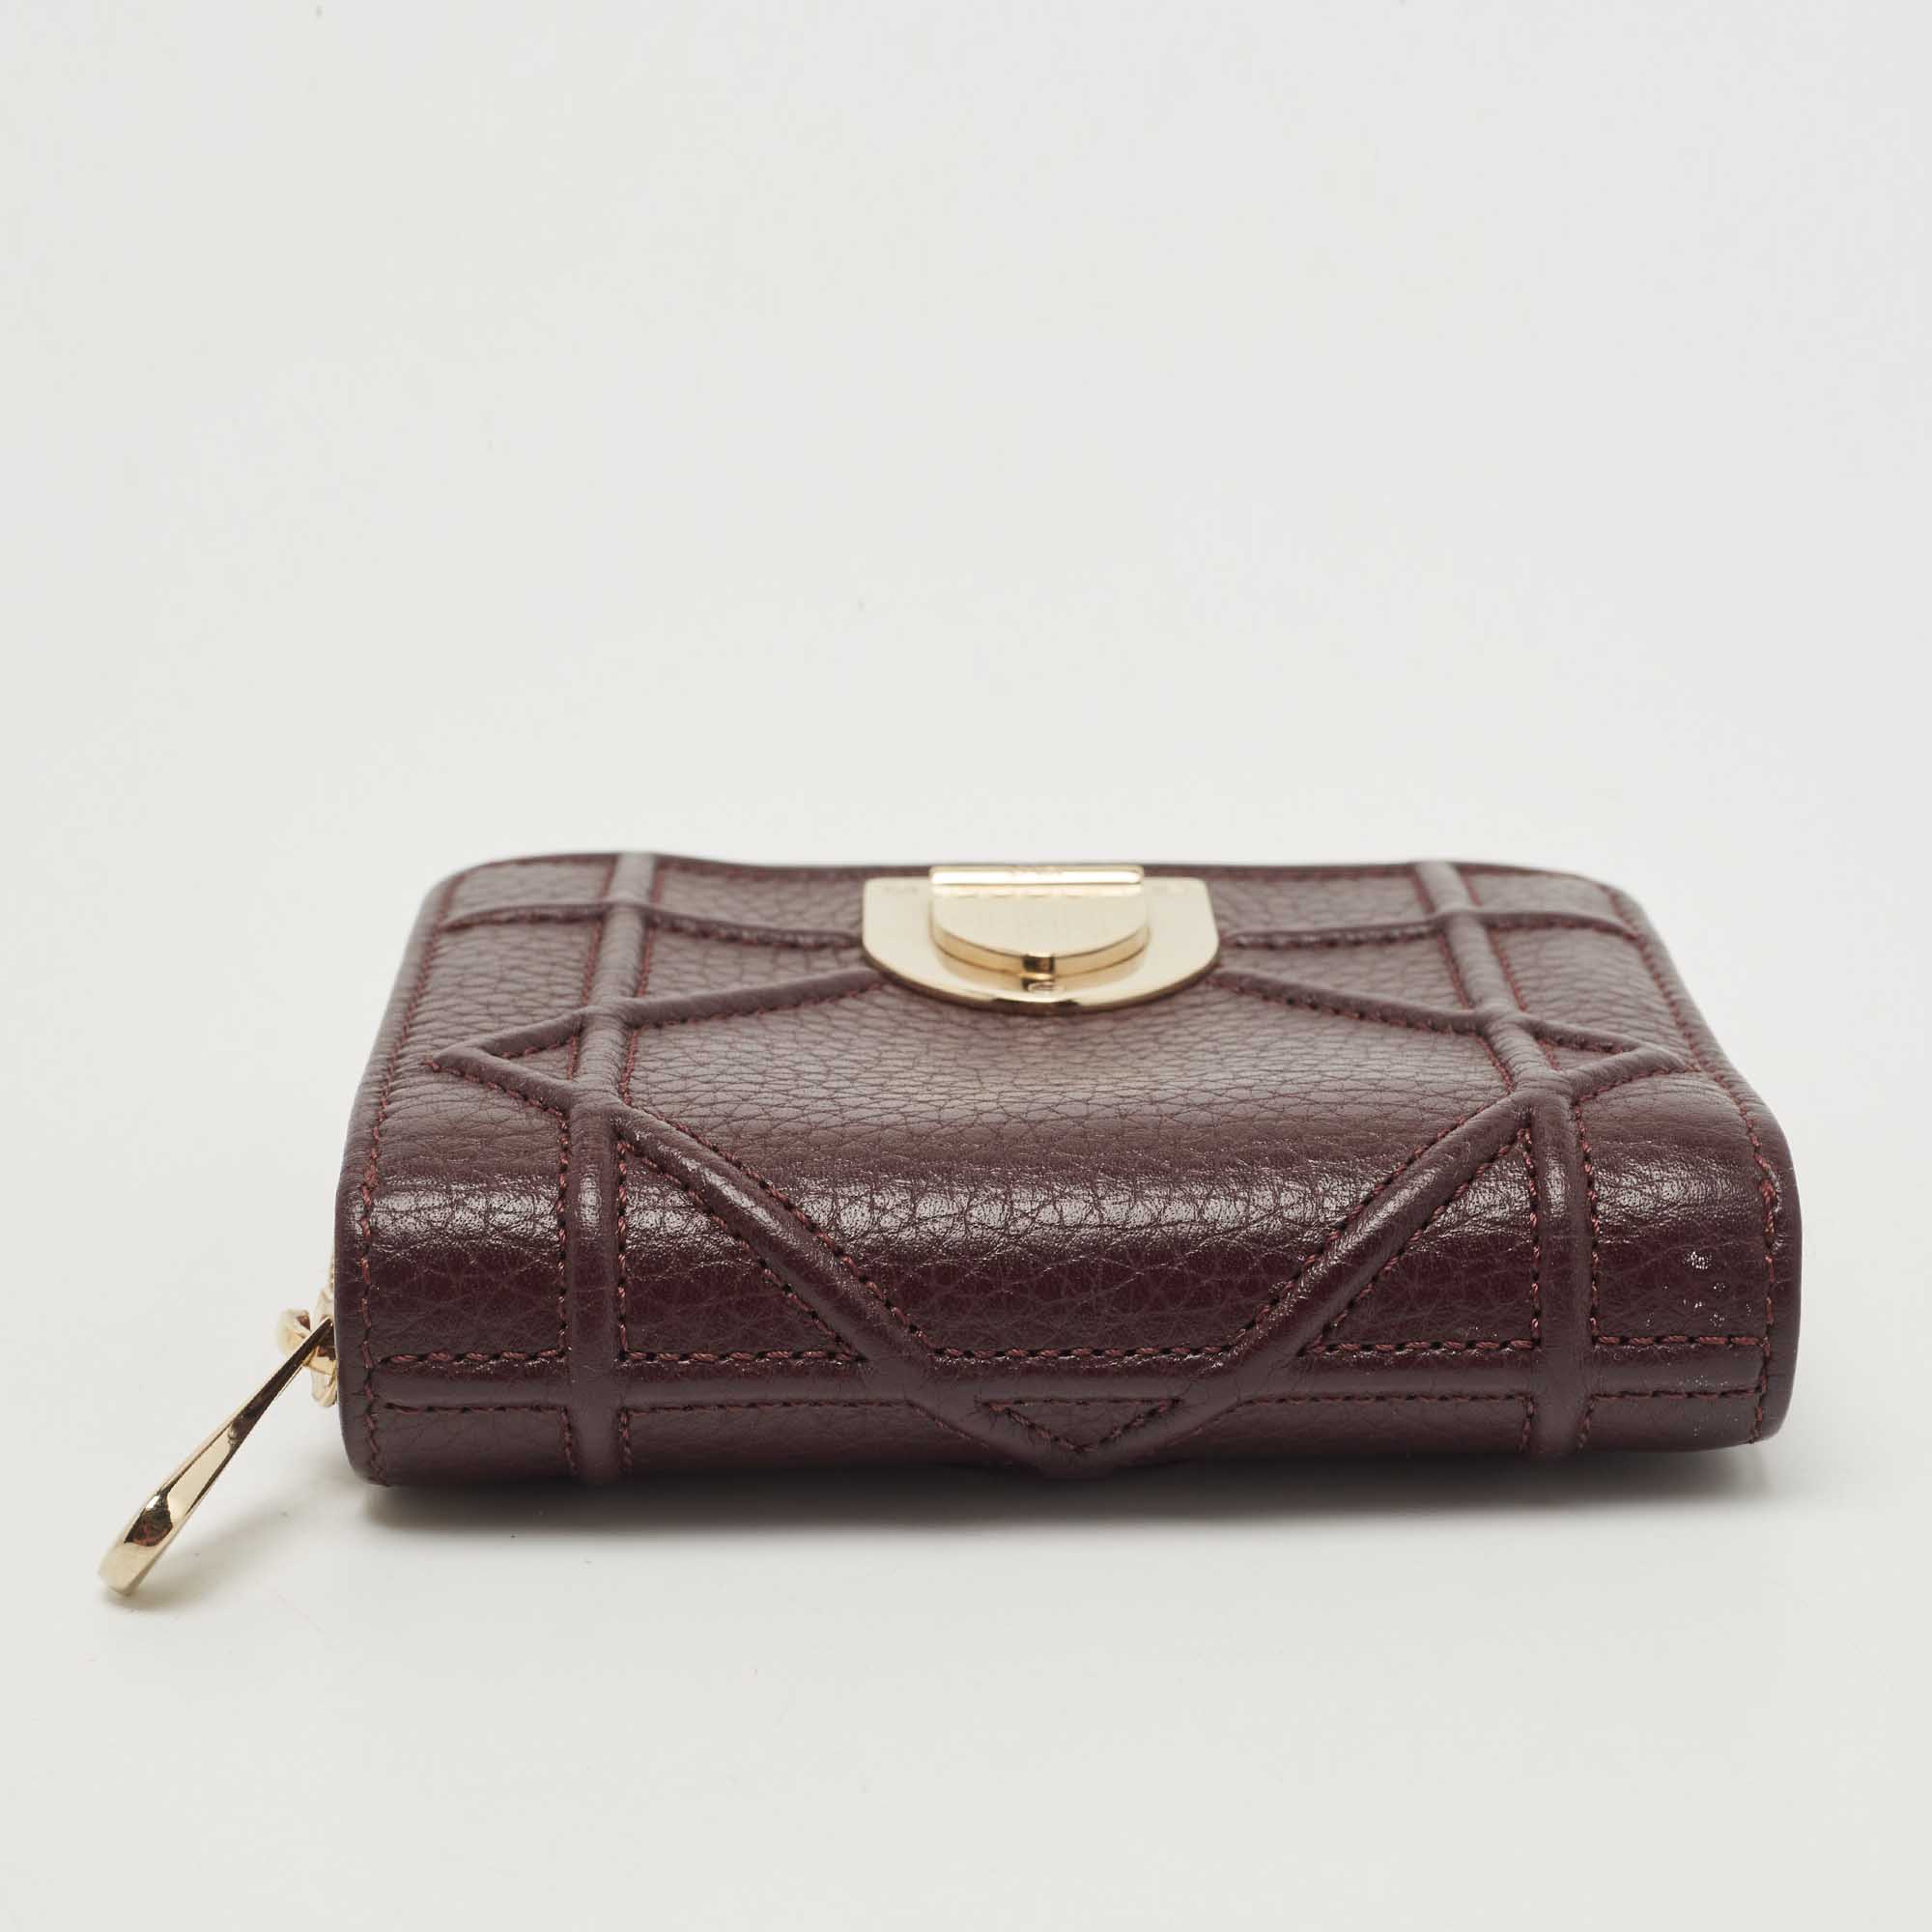 Dior Burgundy Leather Diorama Zip Compact Wallet